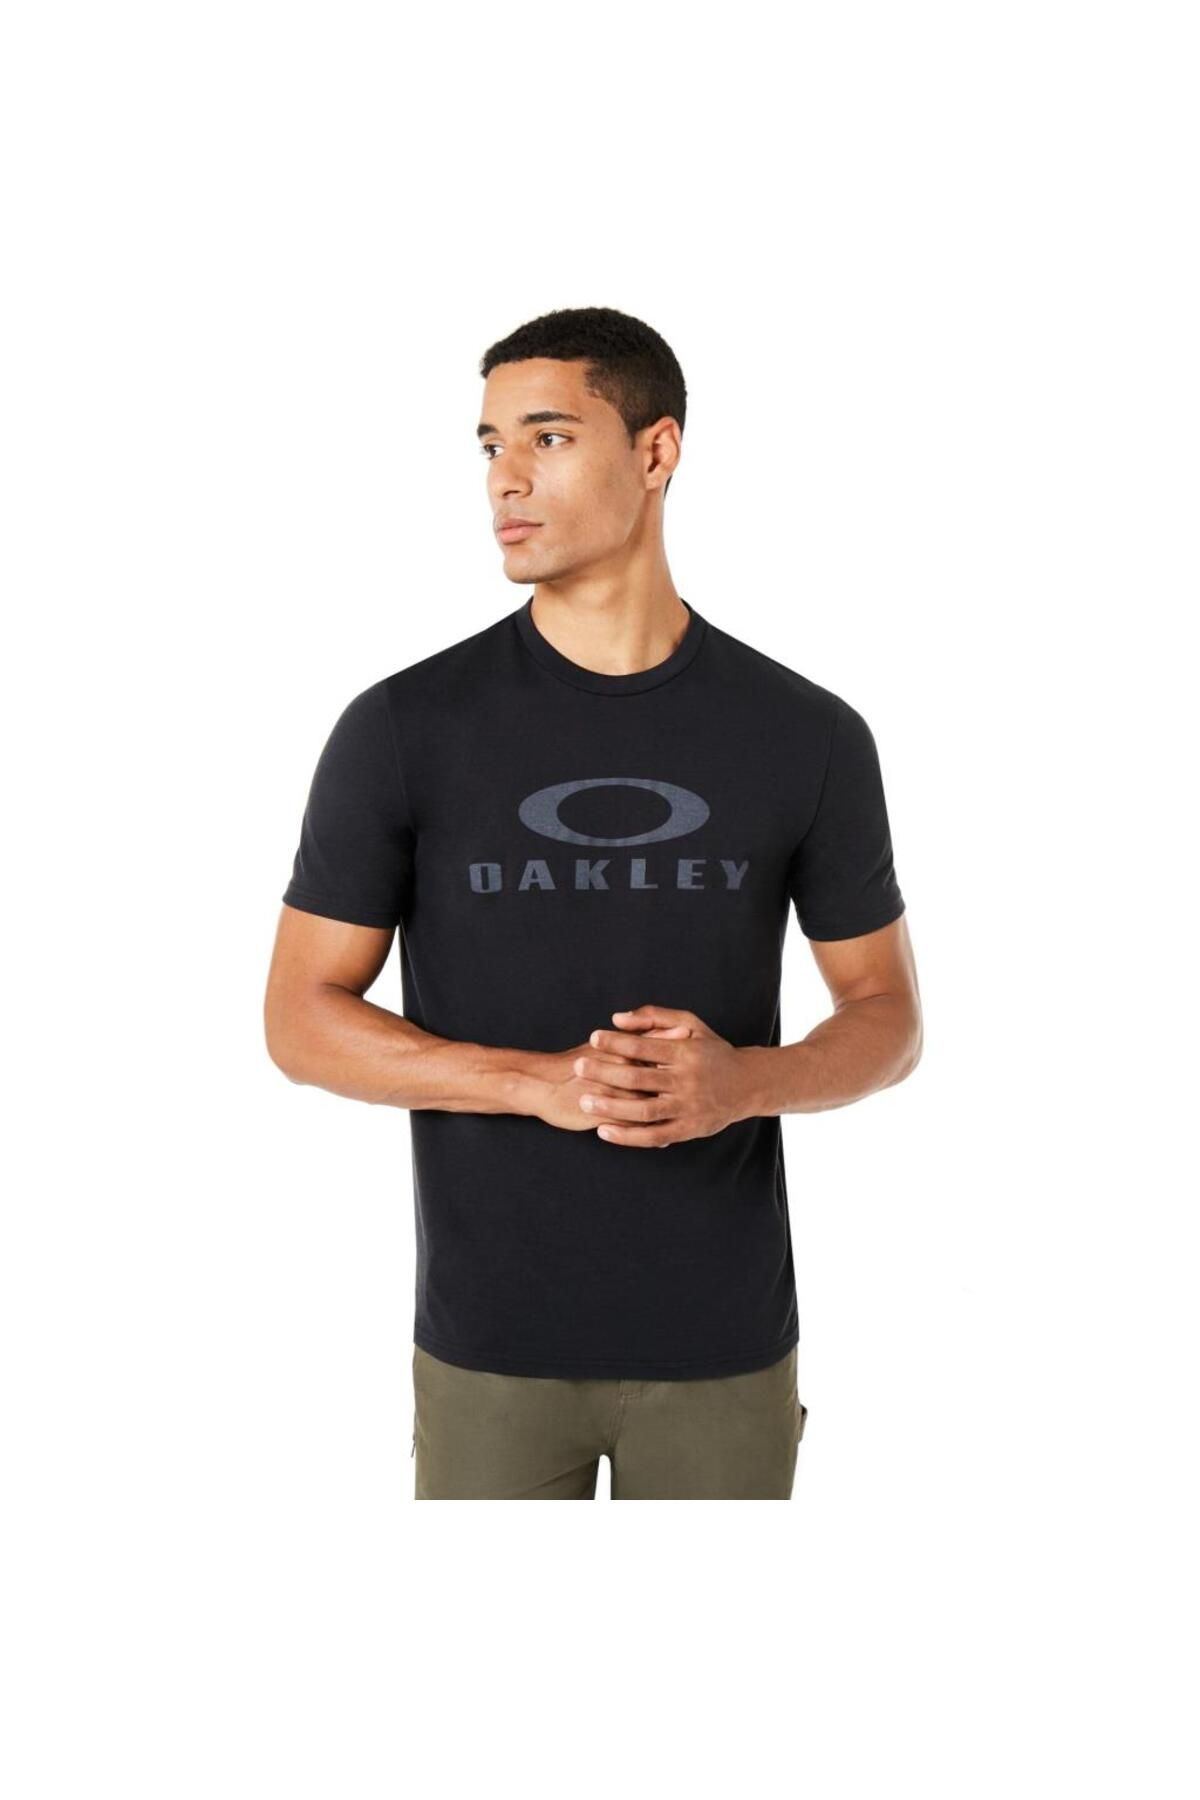 Oakley O Bark Erkek T-shirt